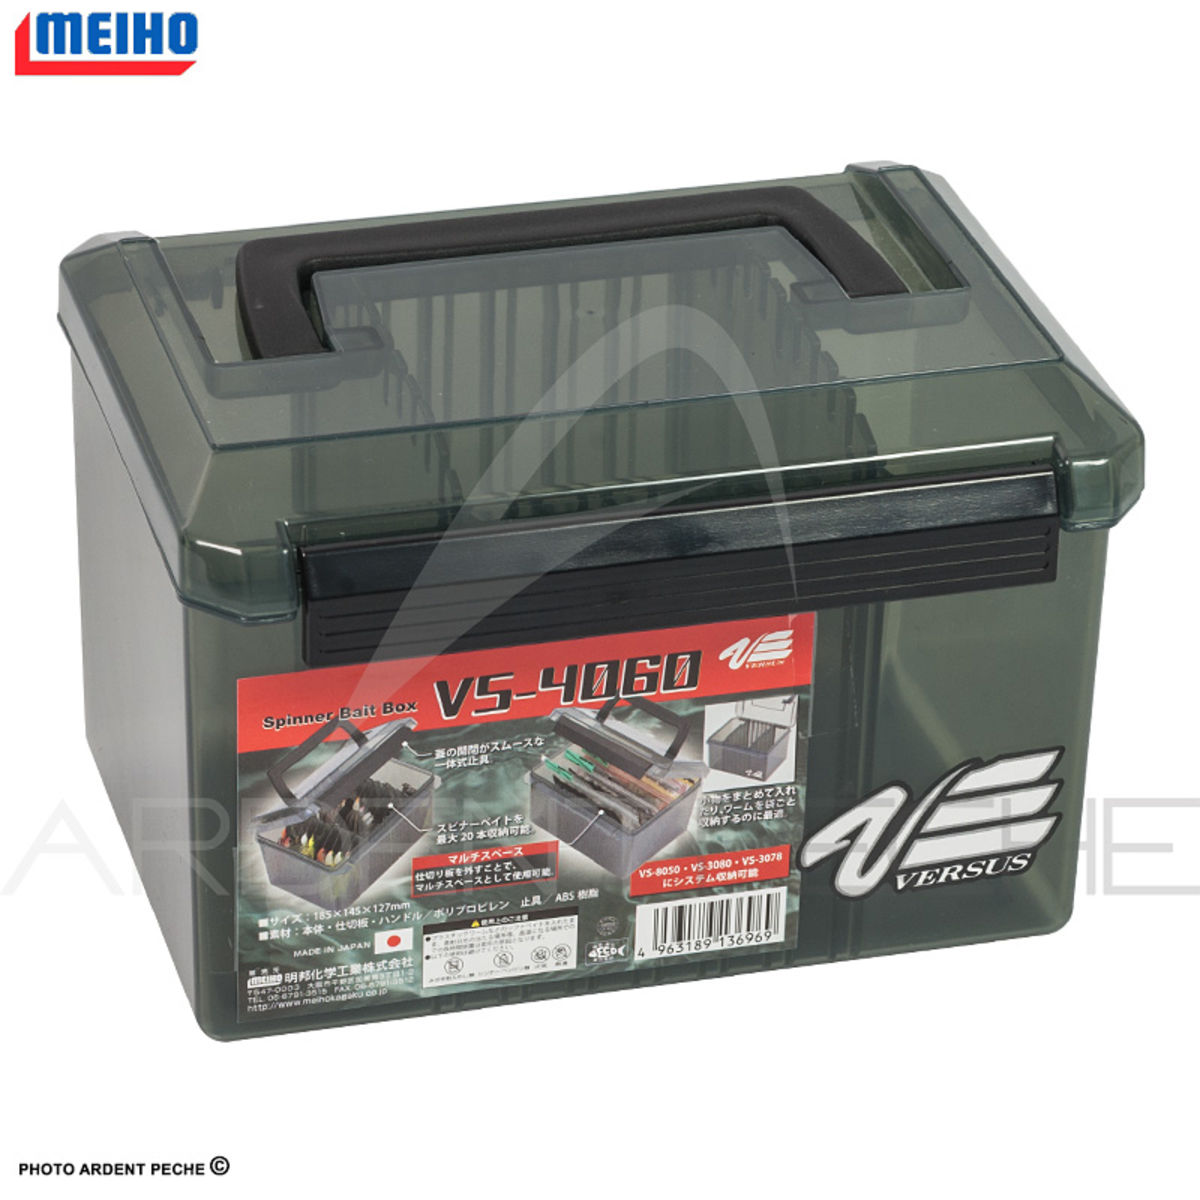 Boîte Meiho VS 8050 (Boîte à peche pour Pêche - Meiho)